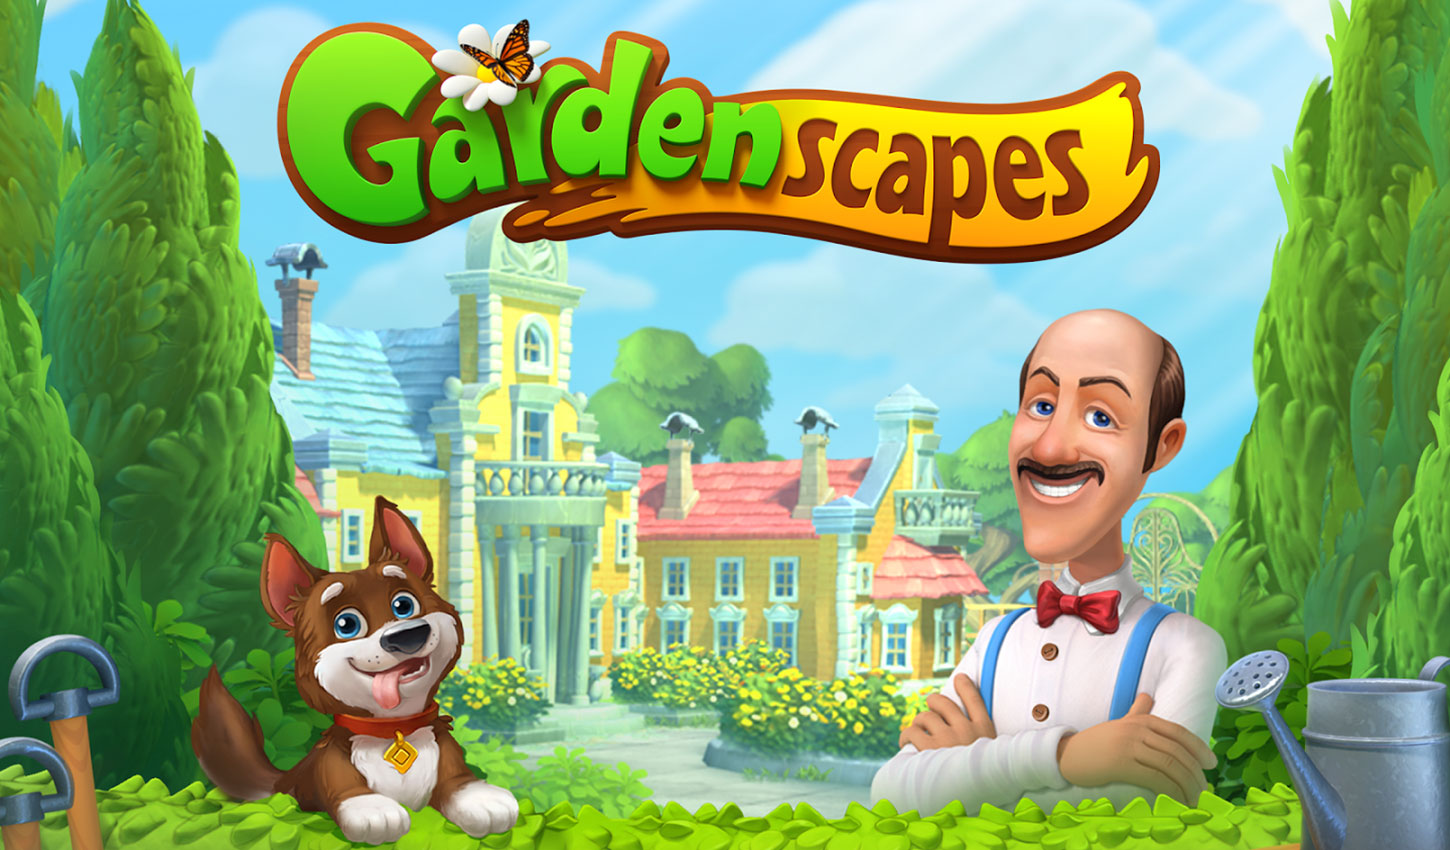 Gardenscapes Surpasses $3 Billion in Lifetime Player Spending